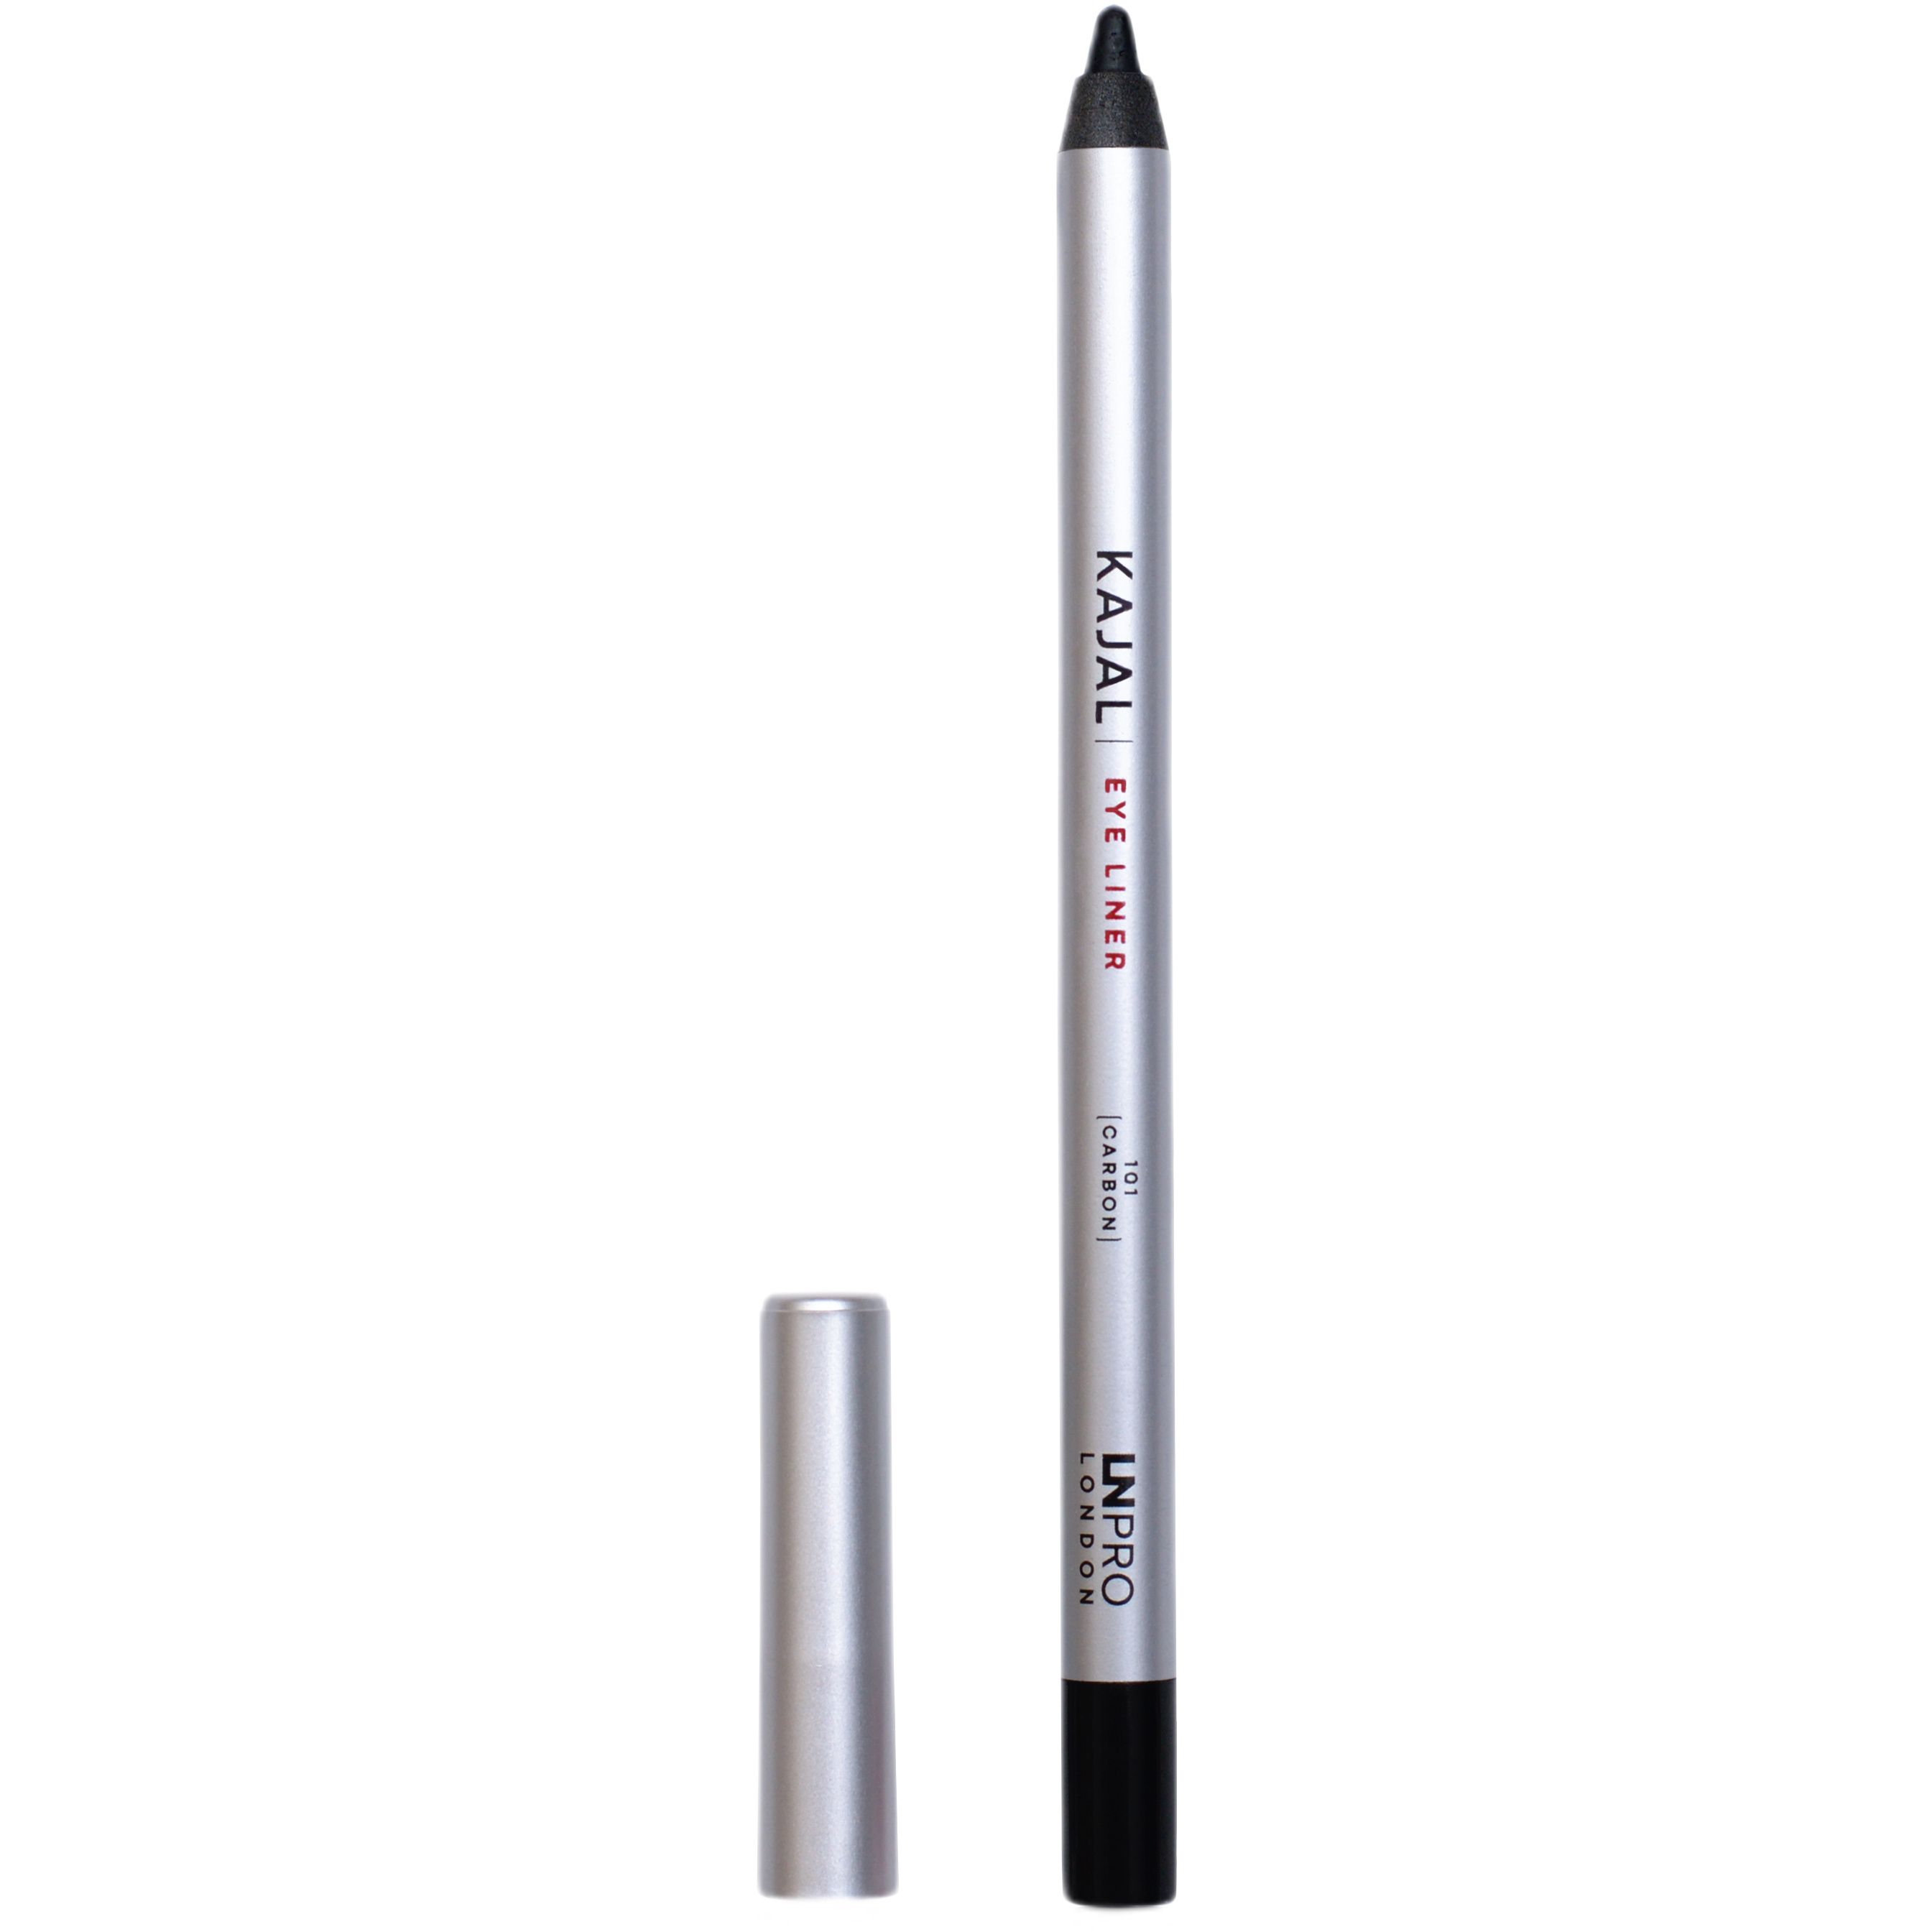 Стойкий гелевый карандаш для глаз LN Pro Kajal Eye Liner тон 101, 1.7 г - фото 1